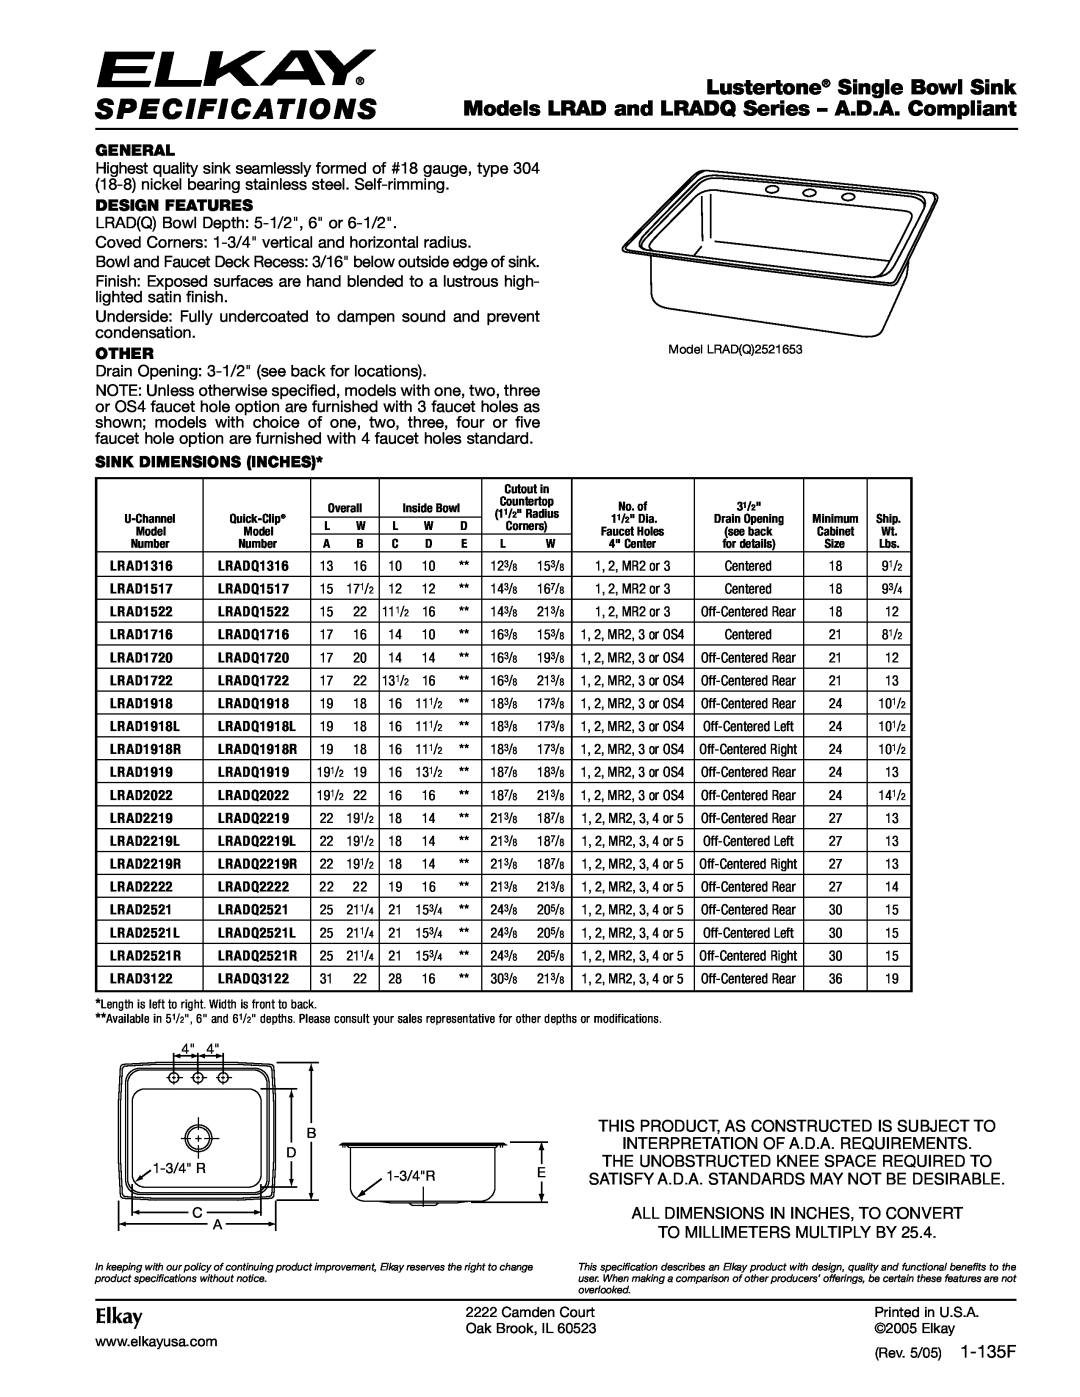 Elkay LRADQ Series specifications Specifications, Lustertone Single Bowl Sink, Elkay, General, Design Features, Other 